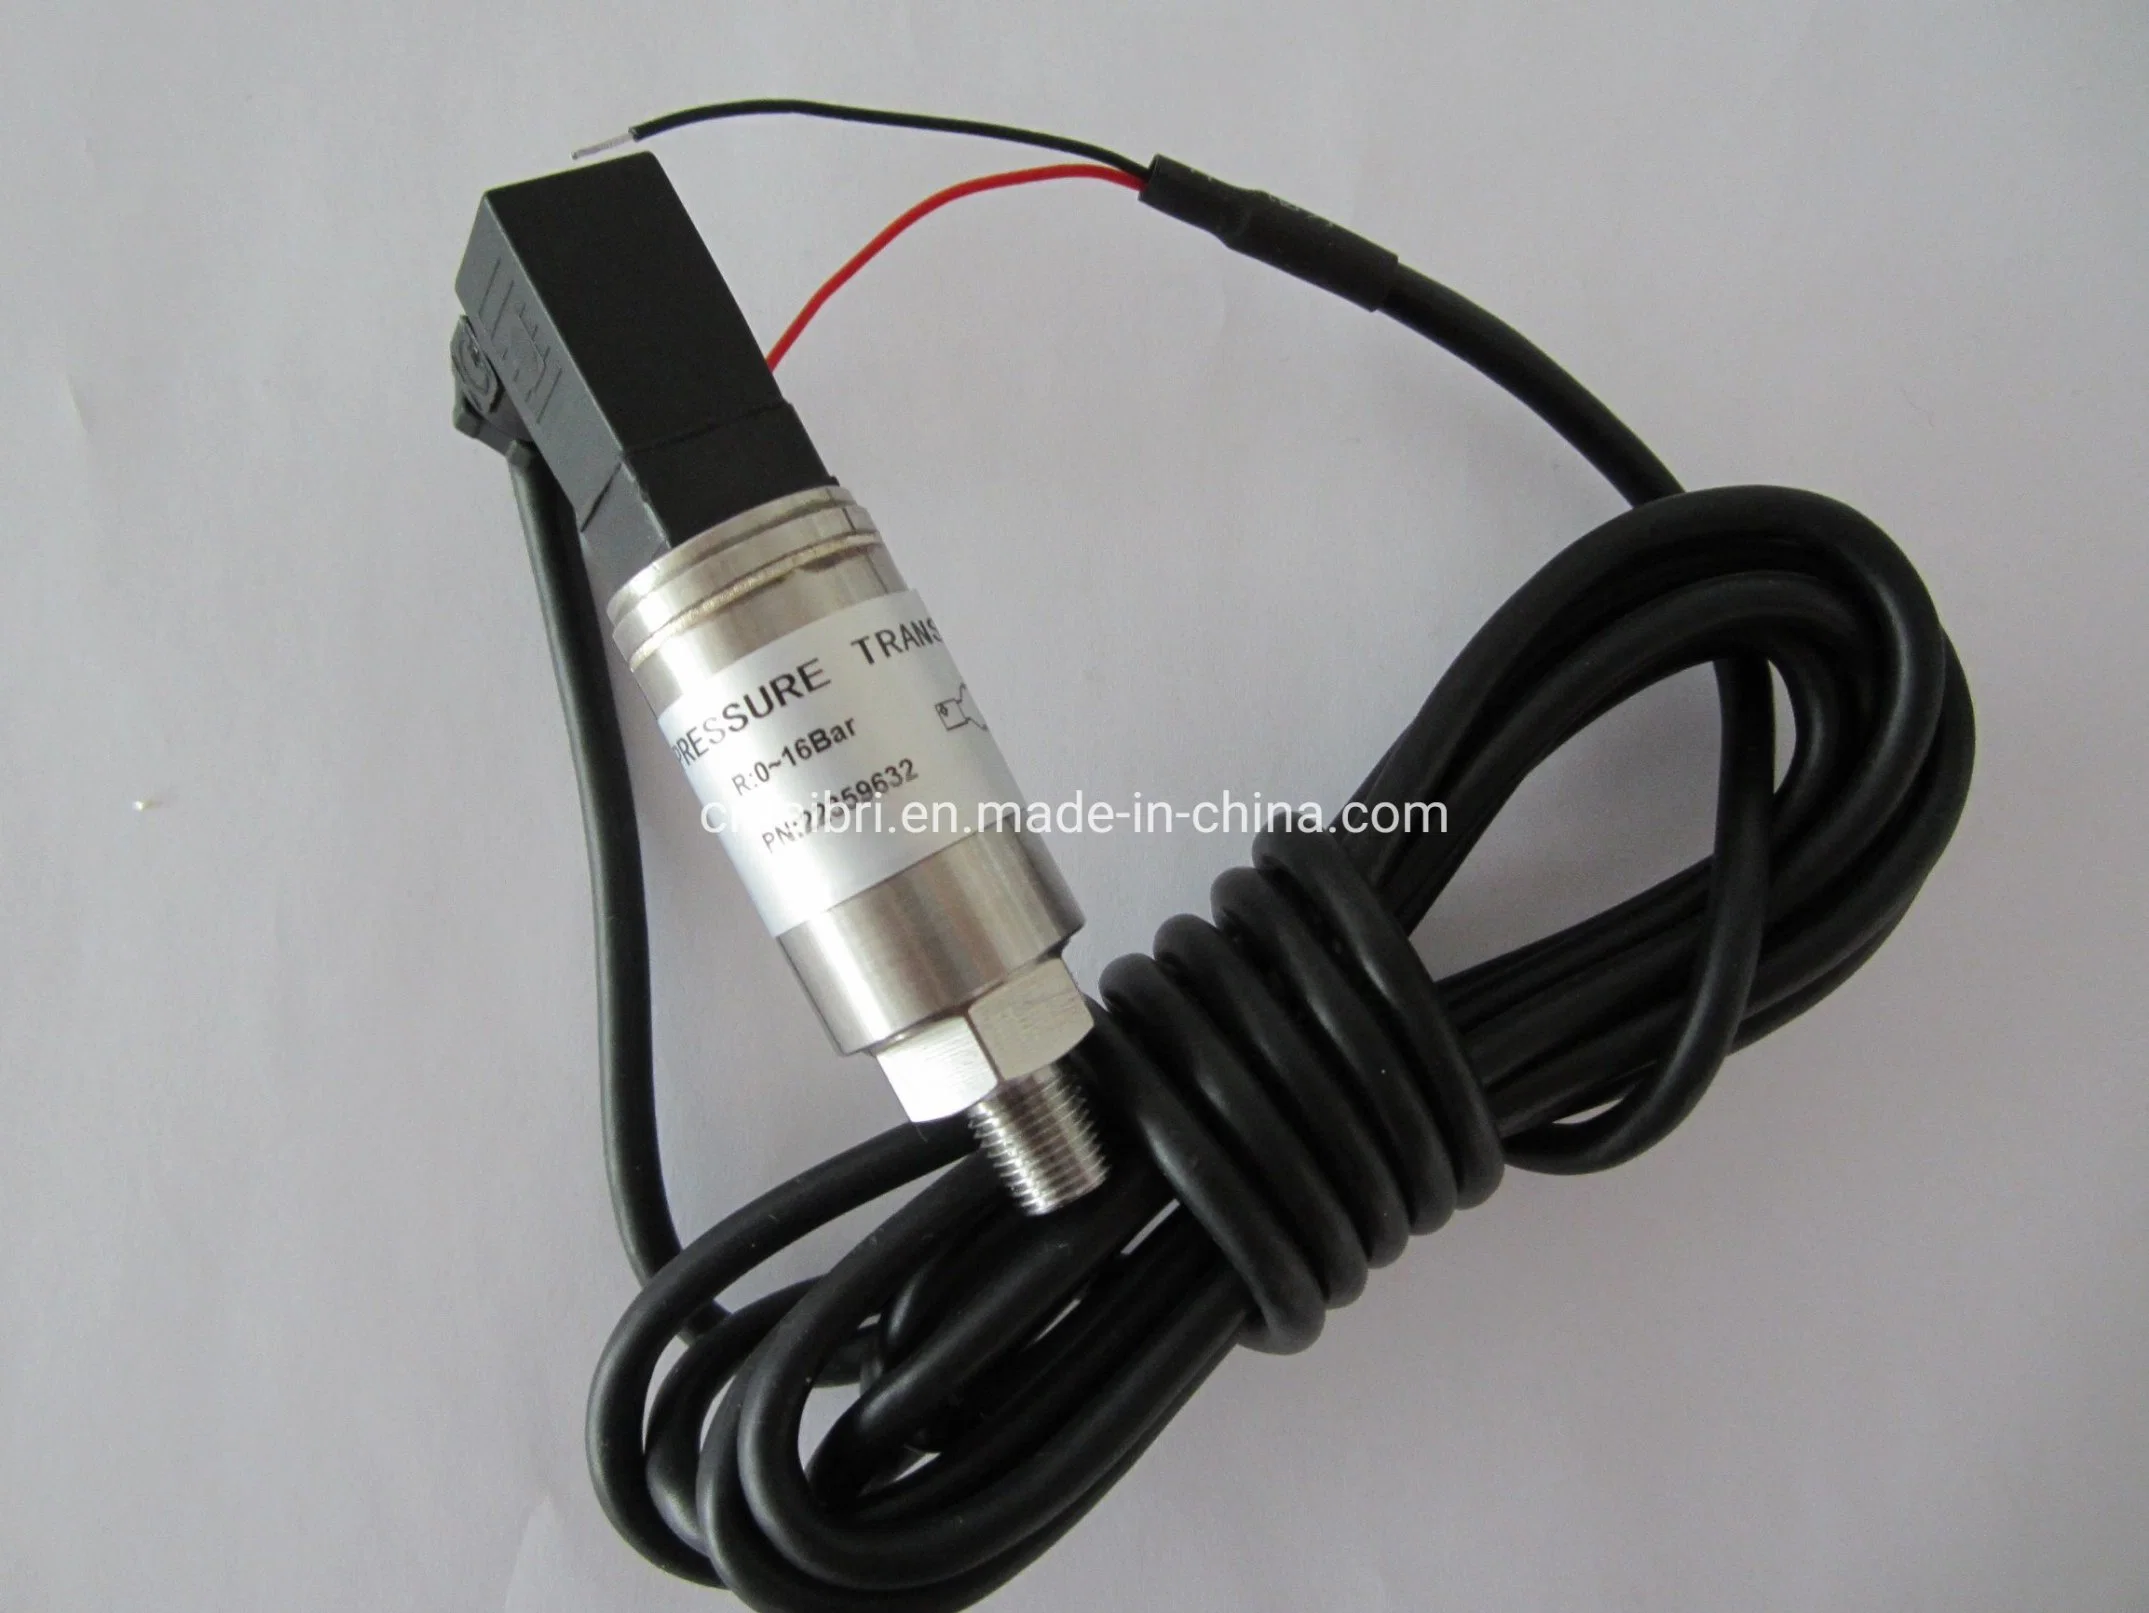 Ingersoll-Rand Transmitter Pressure Sensor Part No. 22359632